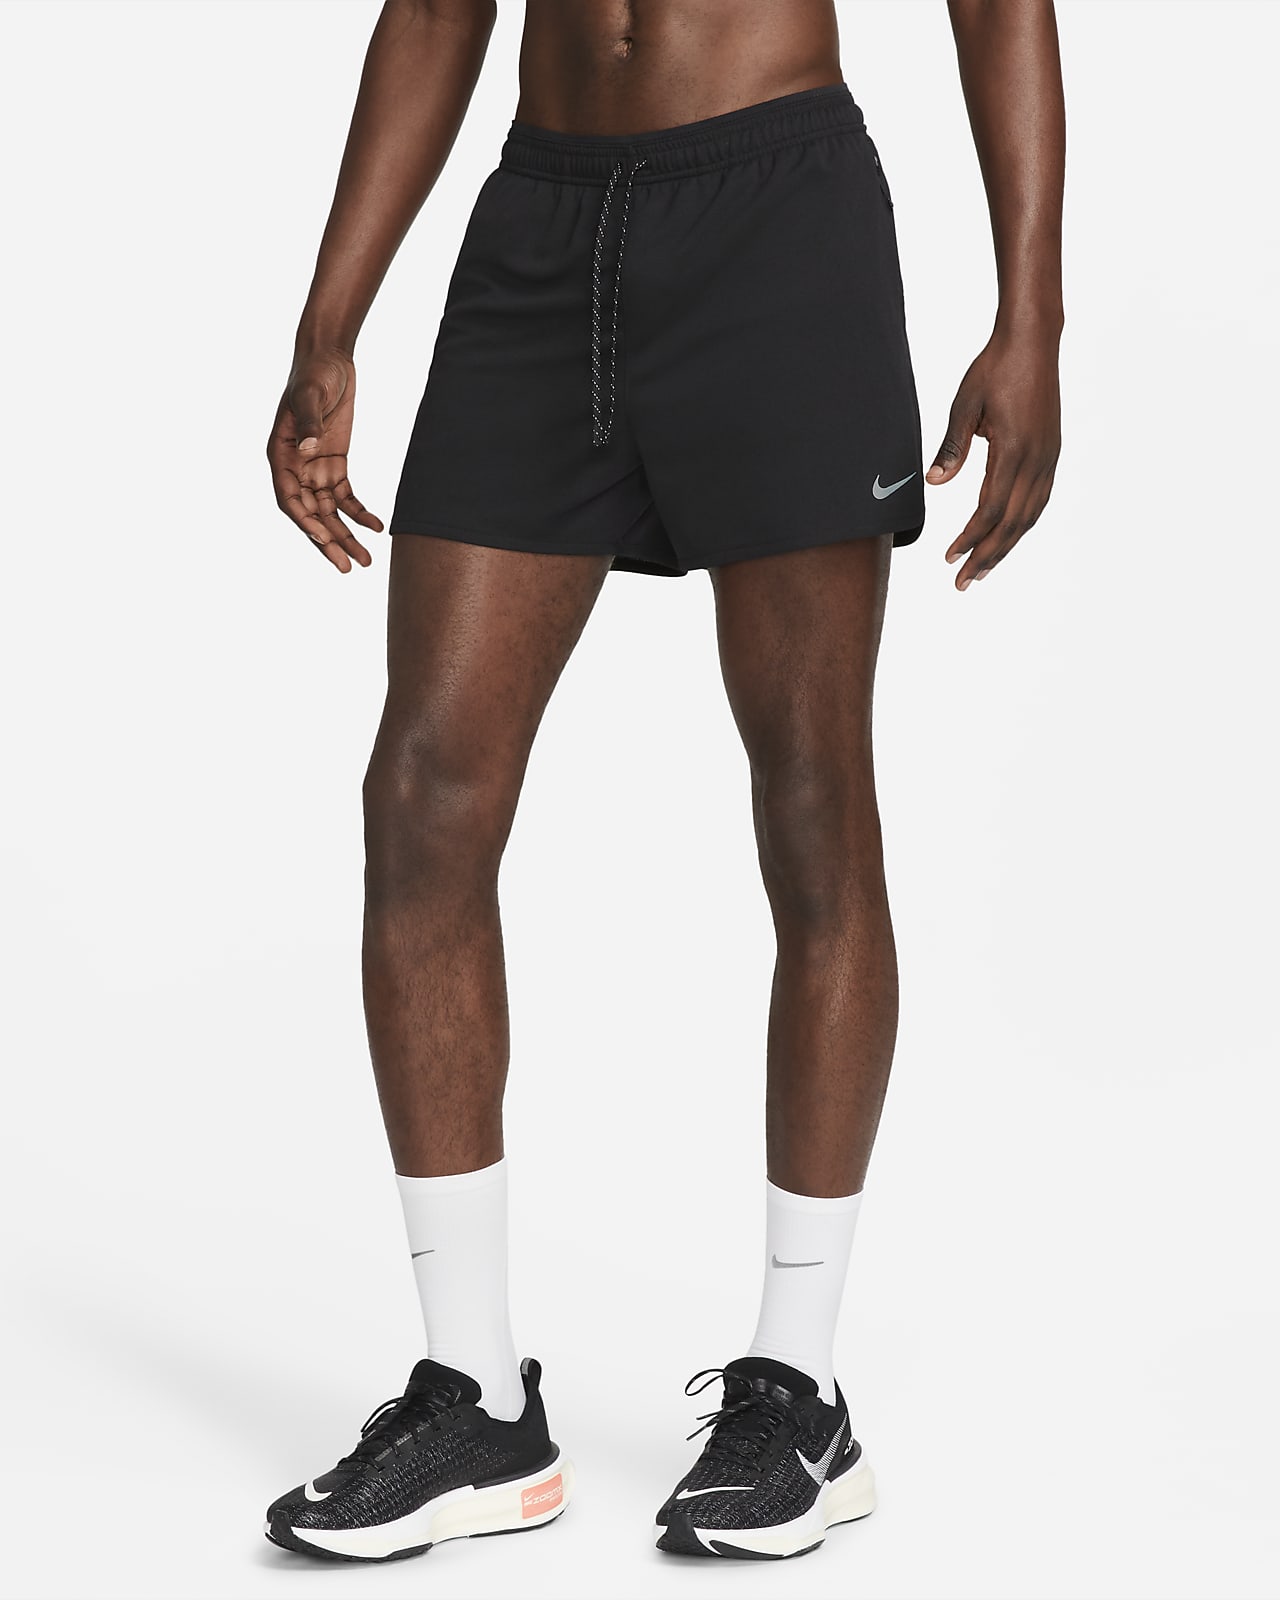 oorsprong ideologie Kunstmatig Nike Dri-FIT Stride Running Division Men's 4" Brief-Lined Running Shorts.  Nike.com